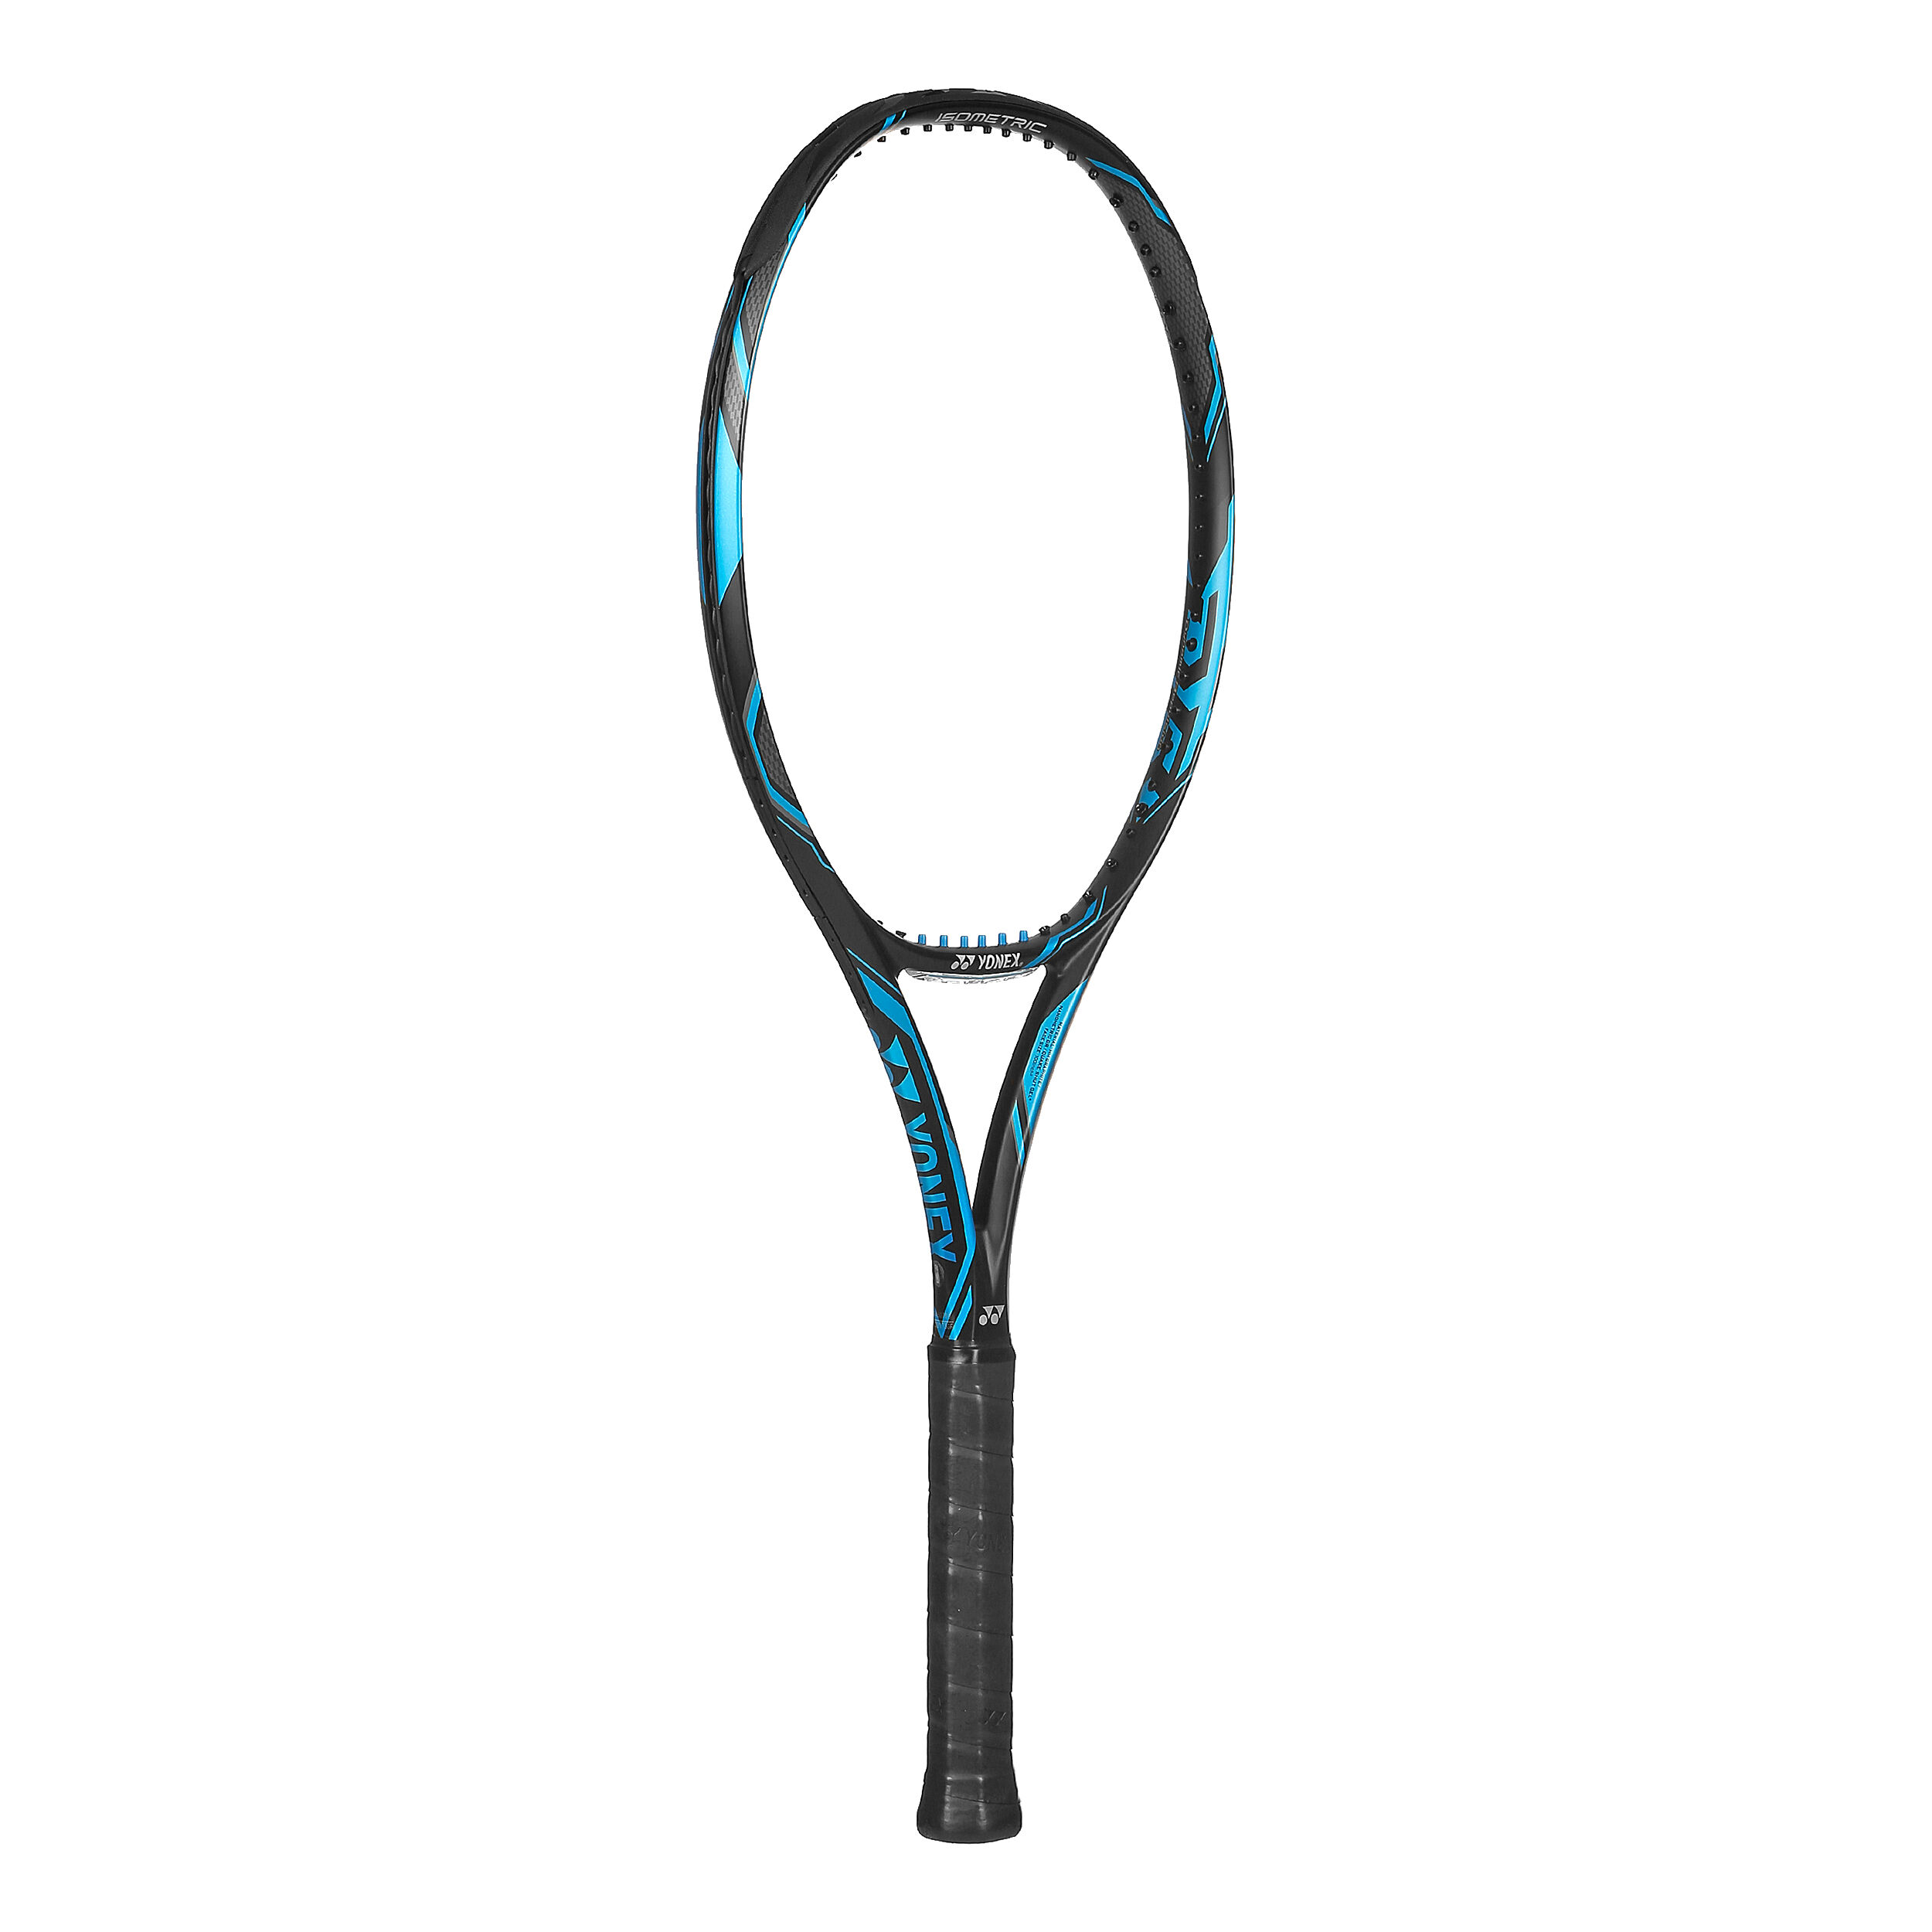 Buy Yonex DR 100 (300g) (used) online | Tennis Point COM